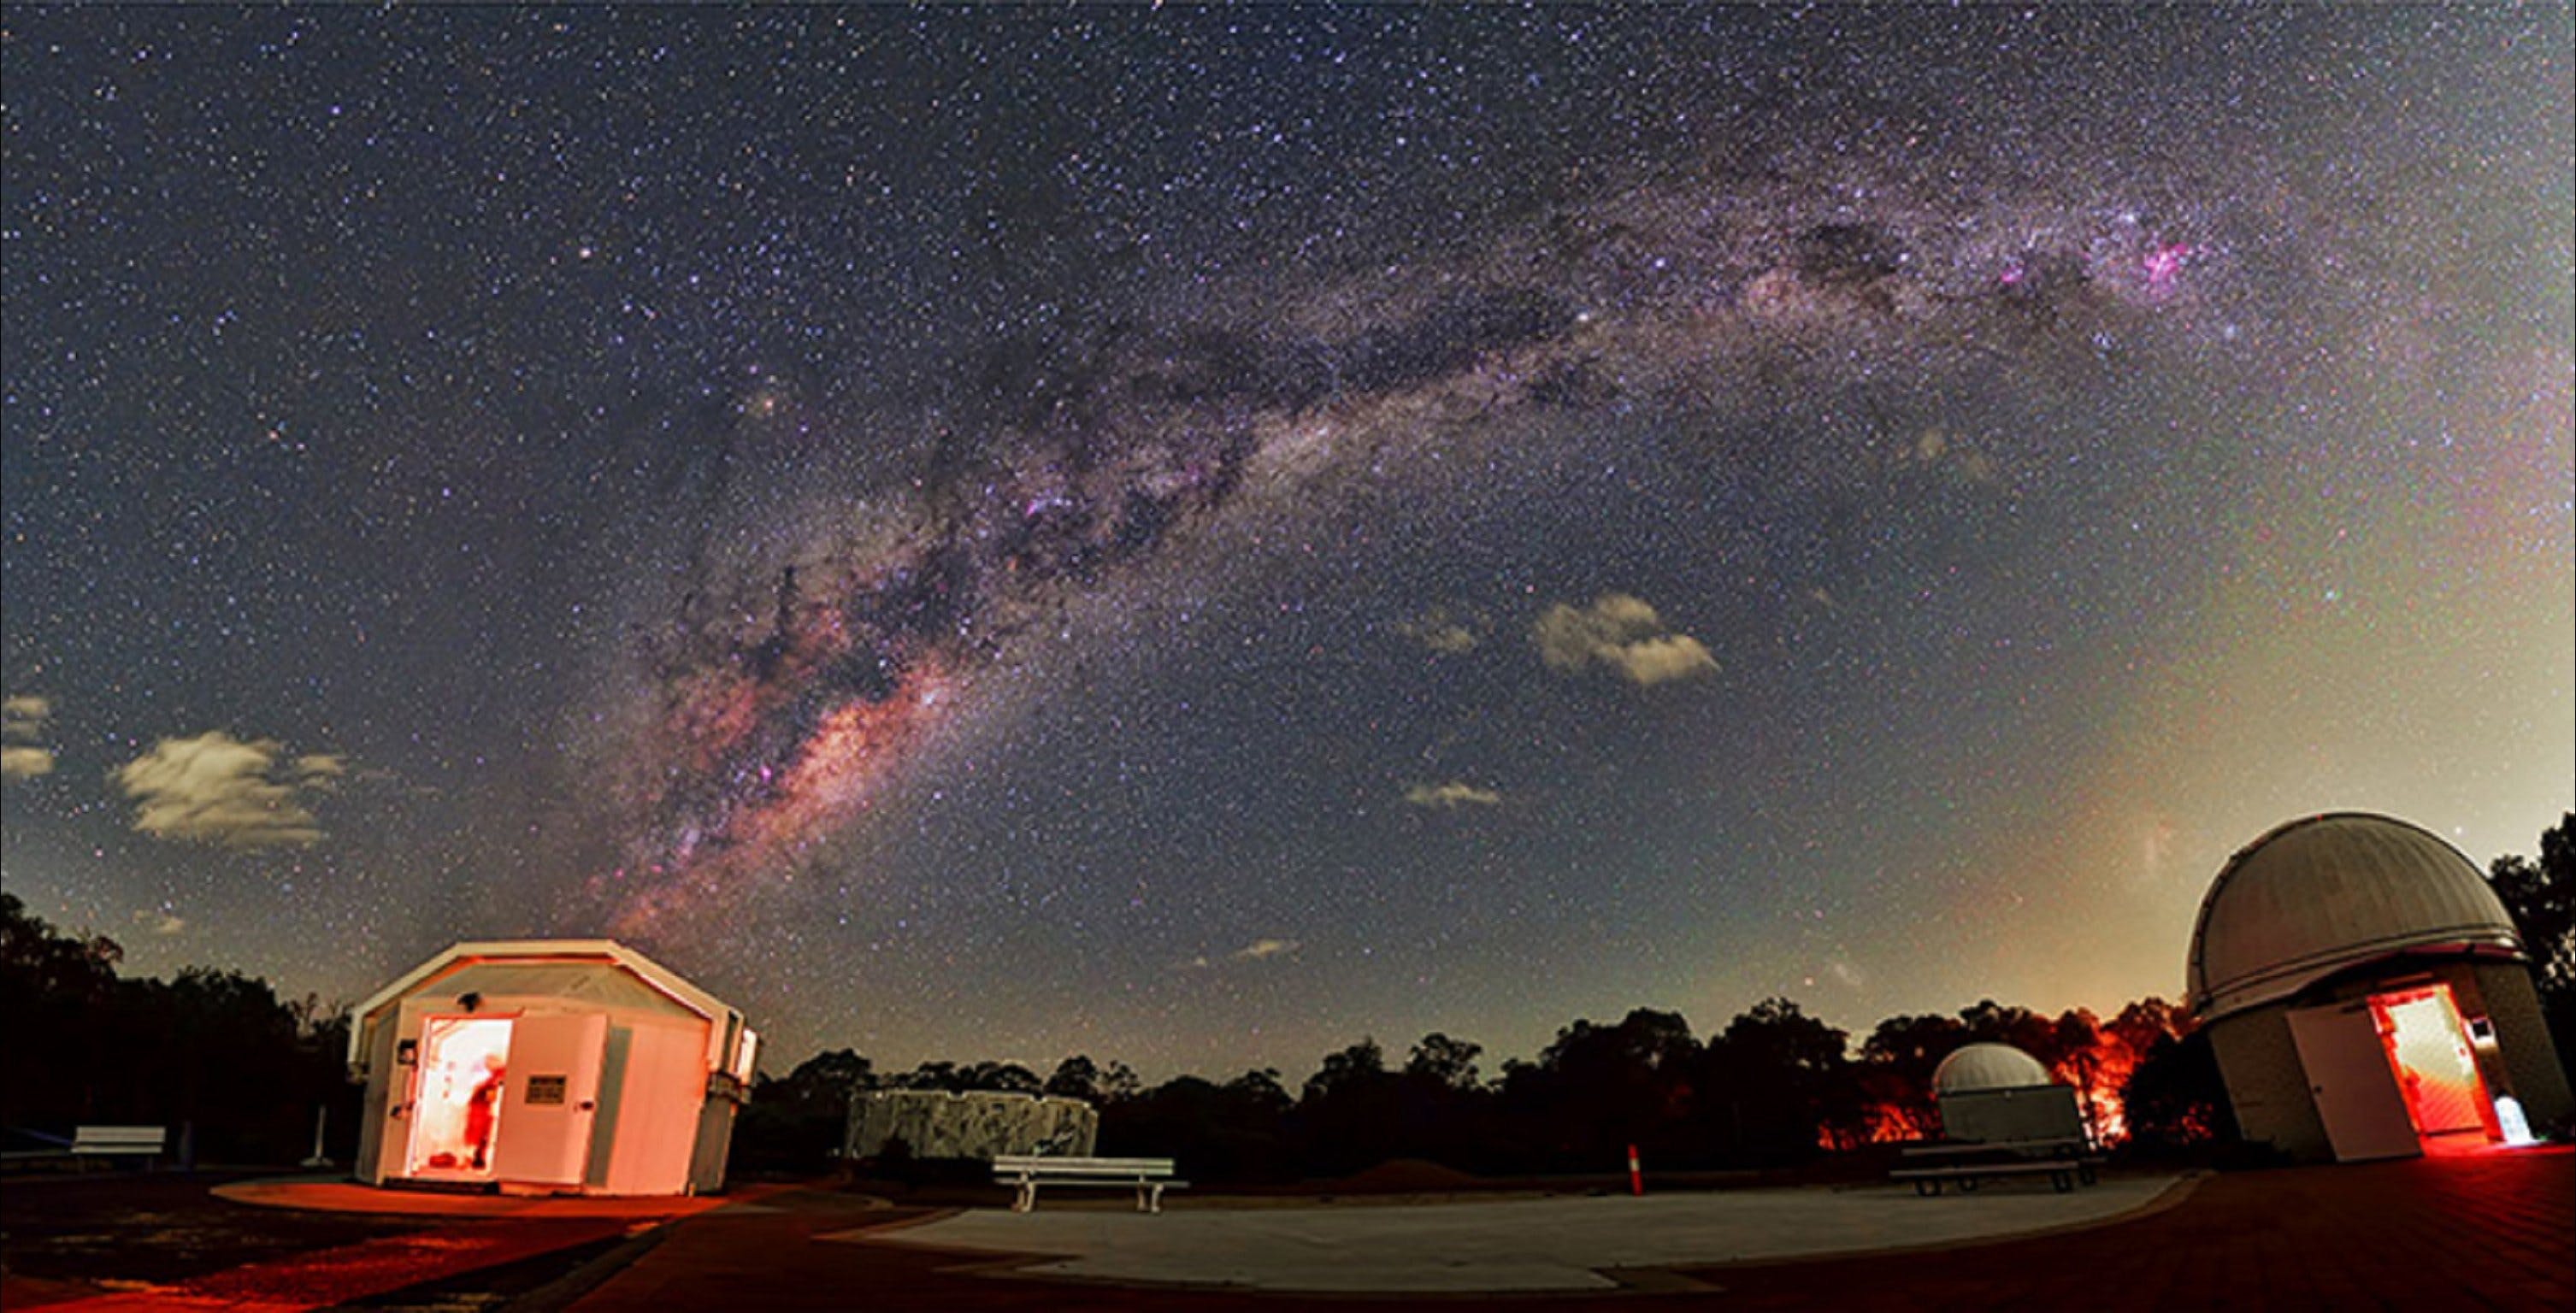 Perth Observatory - Accommodation Kalgoorlie